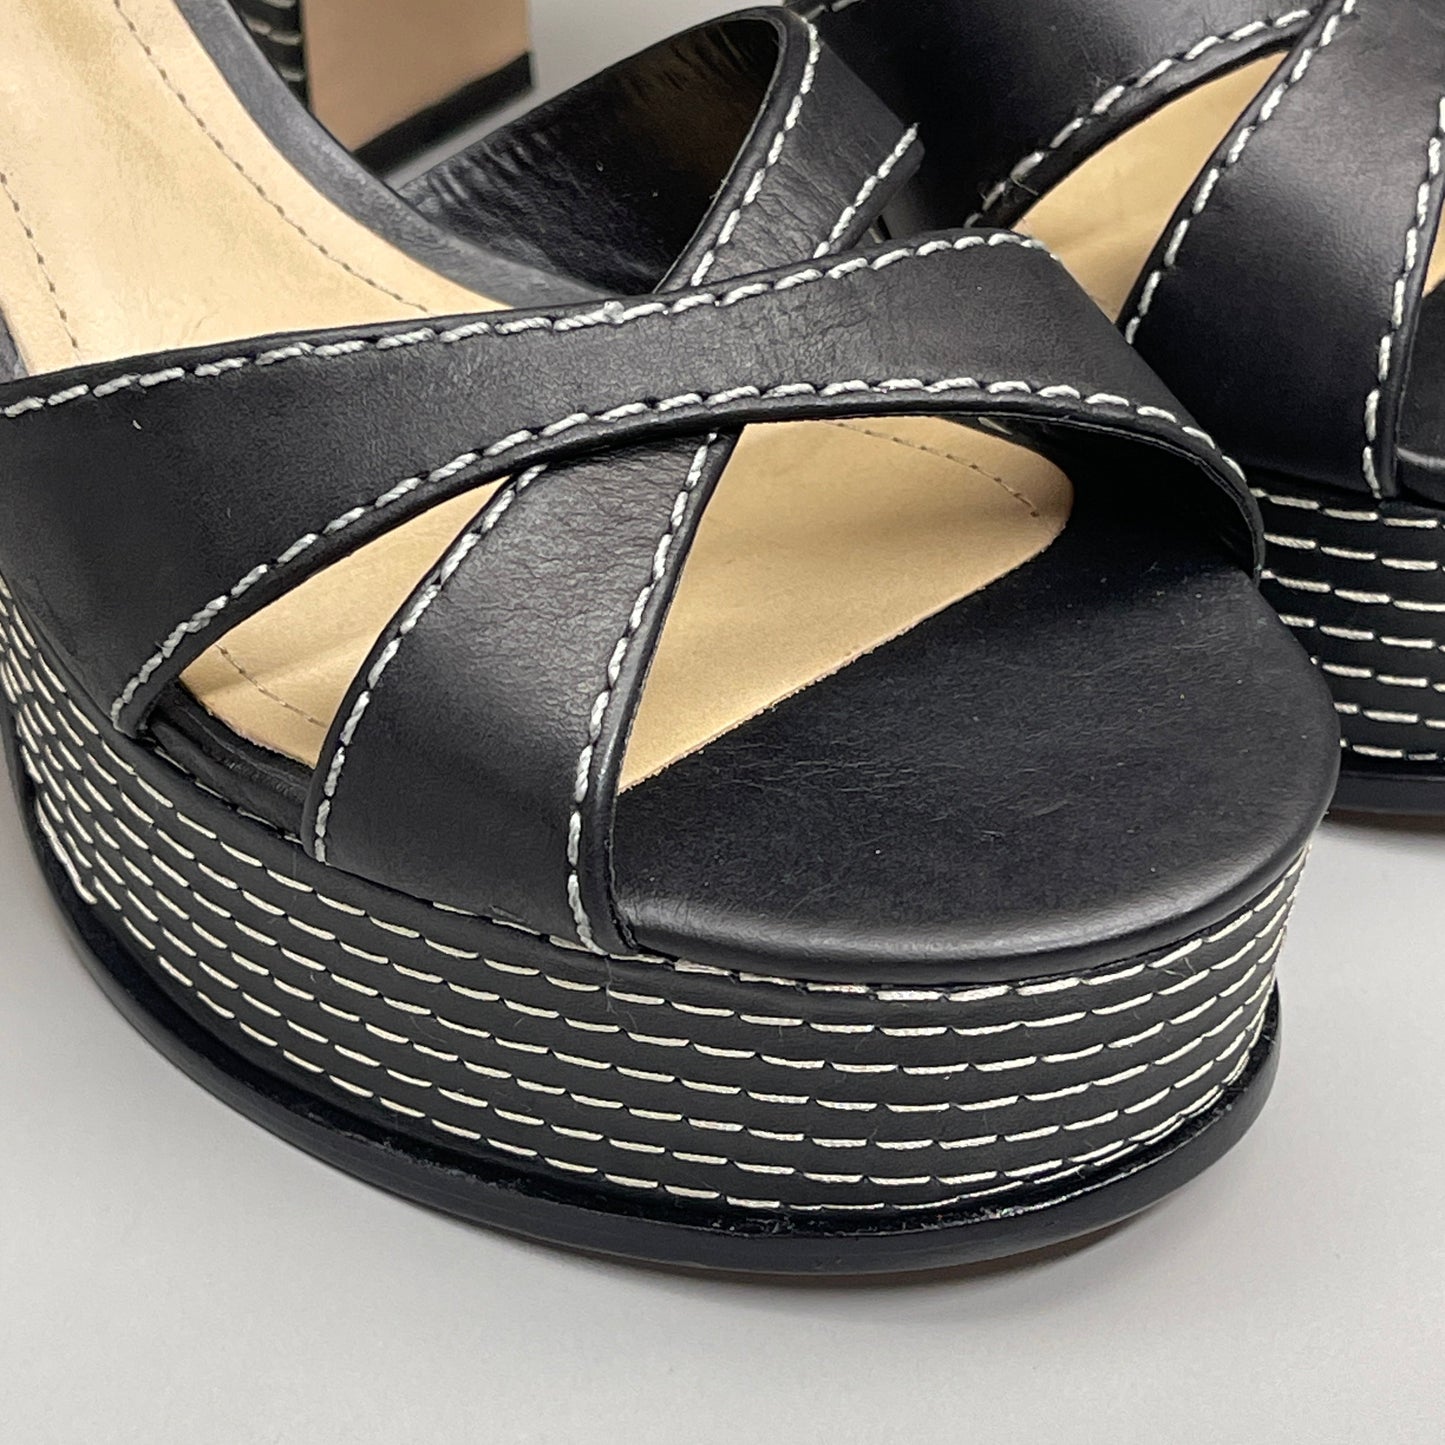 SCHUTZ Keefa Casual Women's Leather Sandal Black Platform 4" Heel Shoes Sz 6.5B (New)